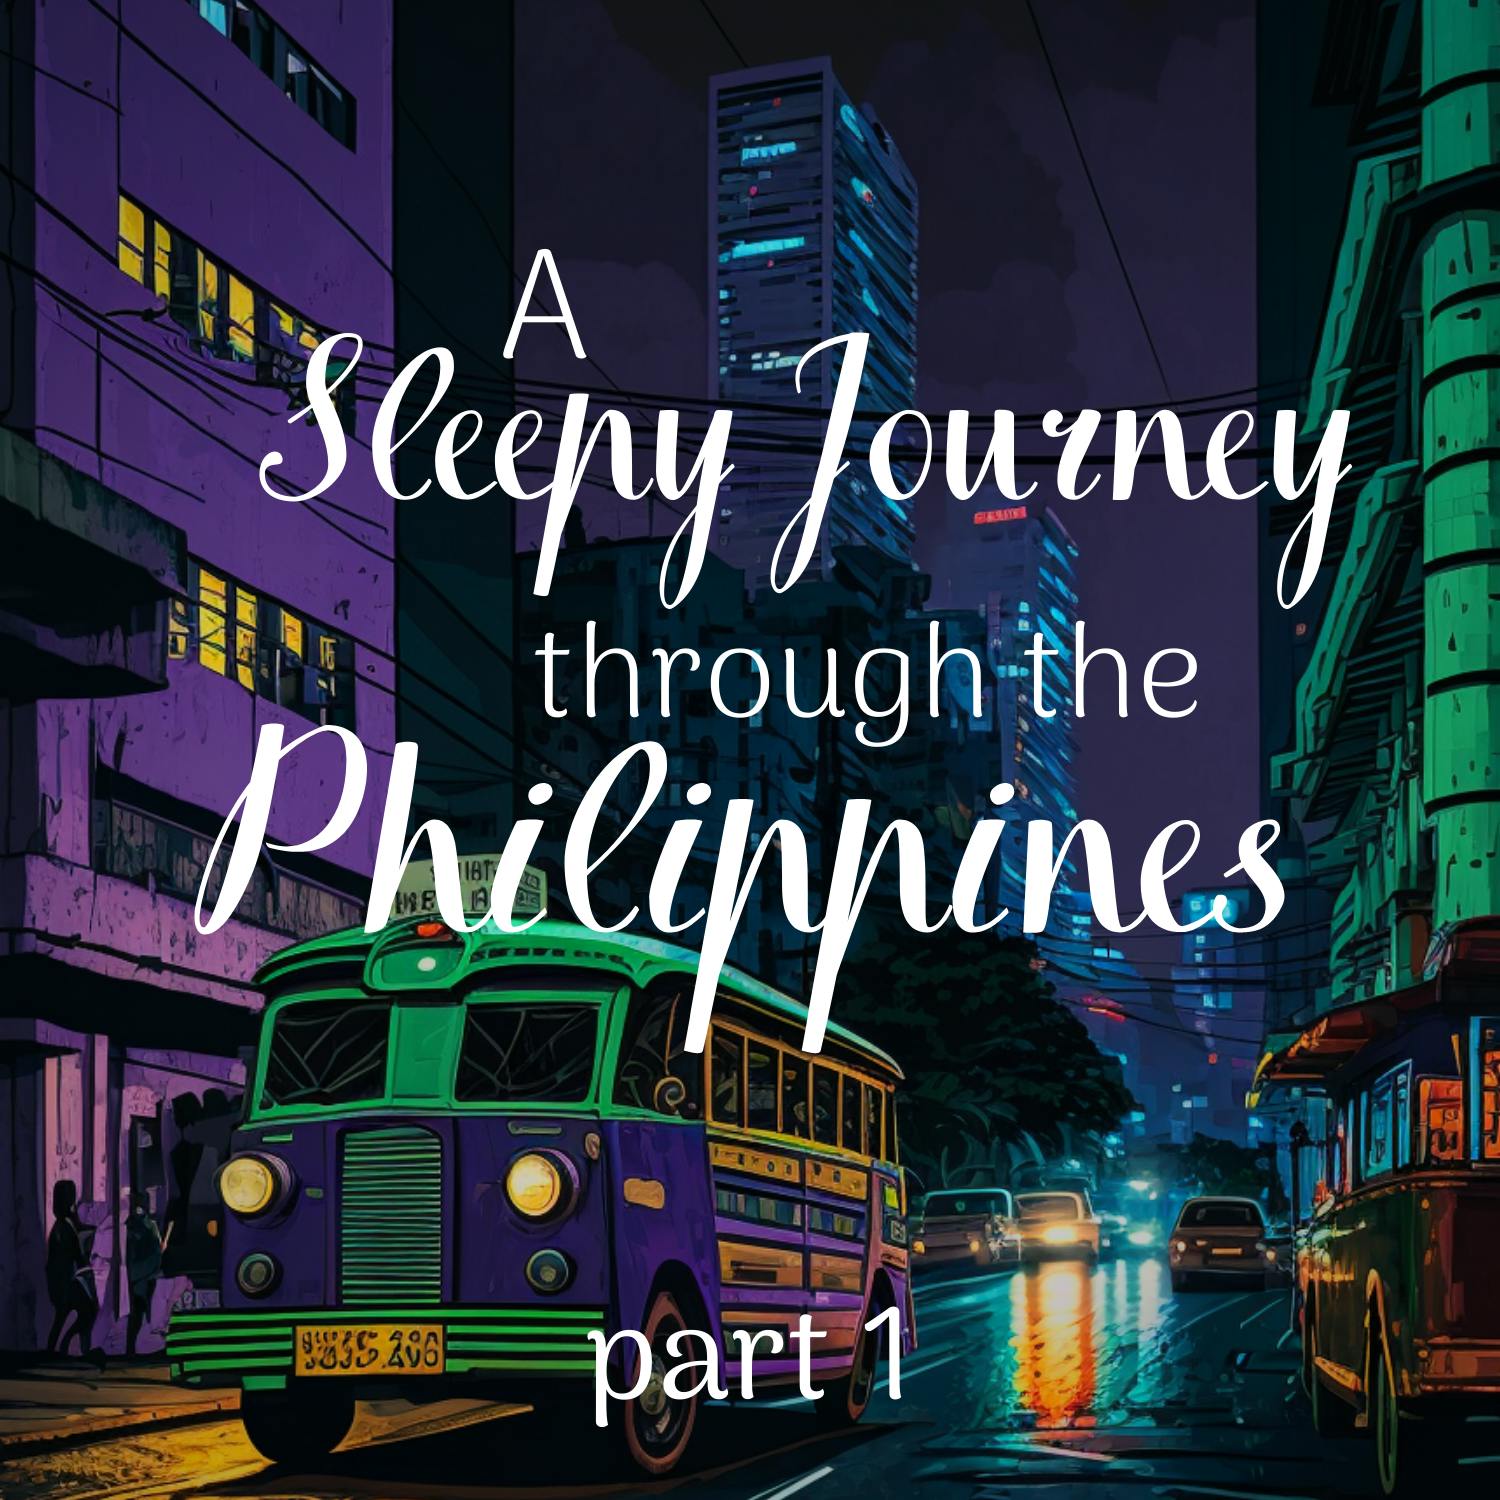 A Sleepy Journey through the Philippines: Part 1